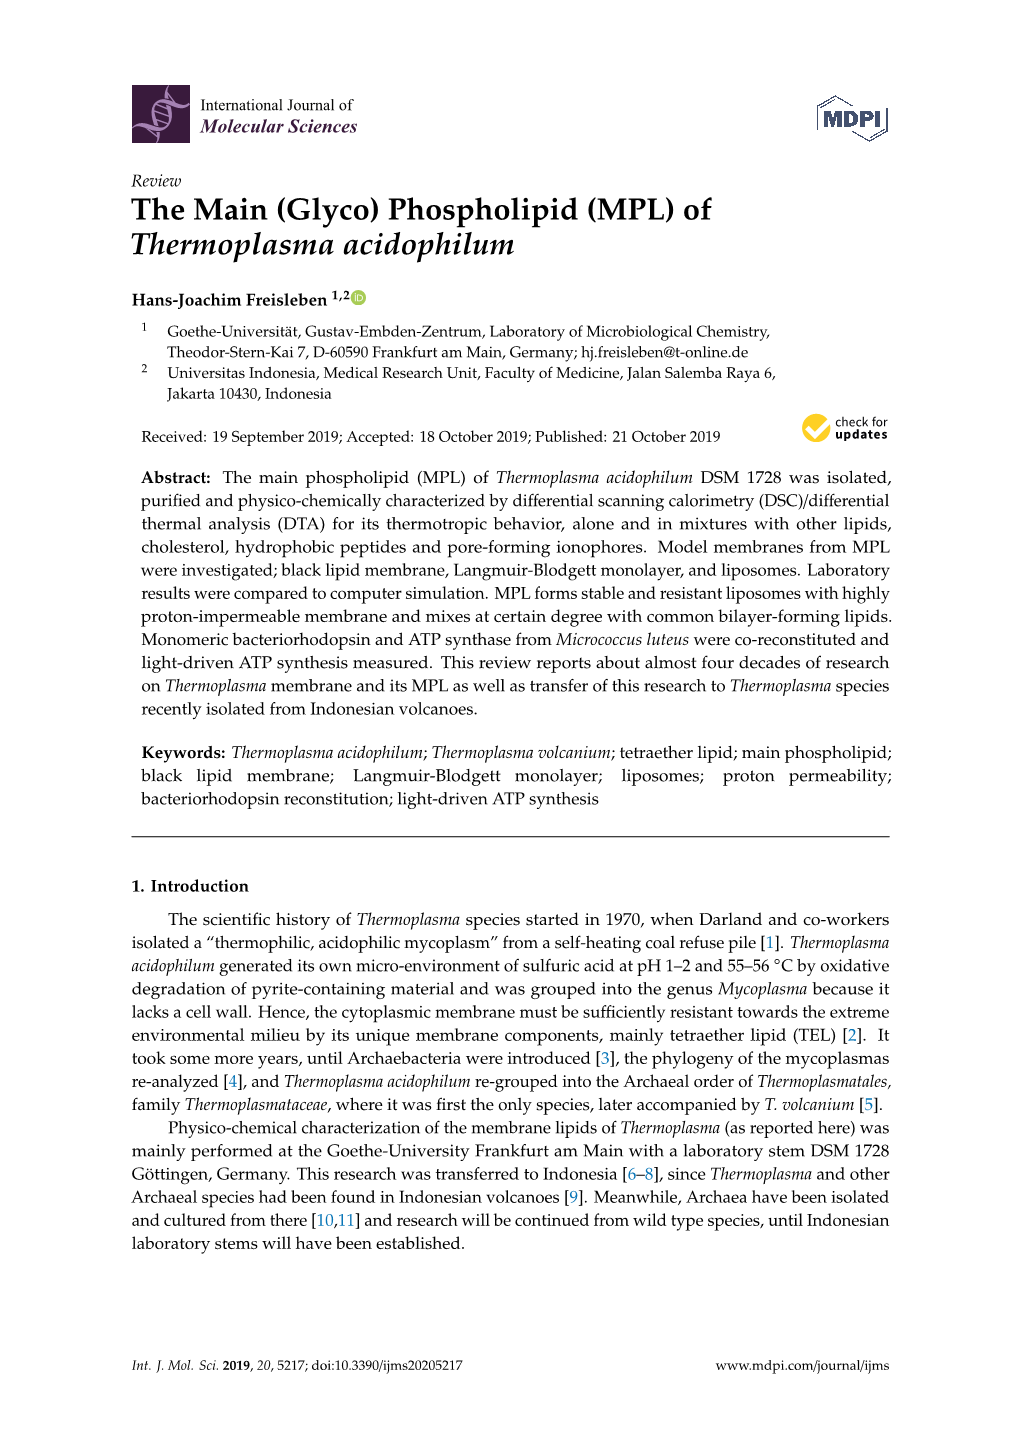 The Main (Glyco) Phospholipid (MPL) of Thermoplasma Acidophilum